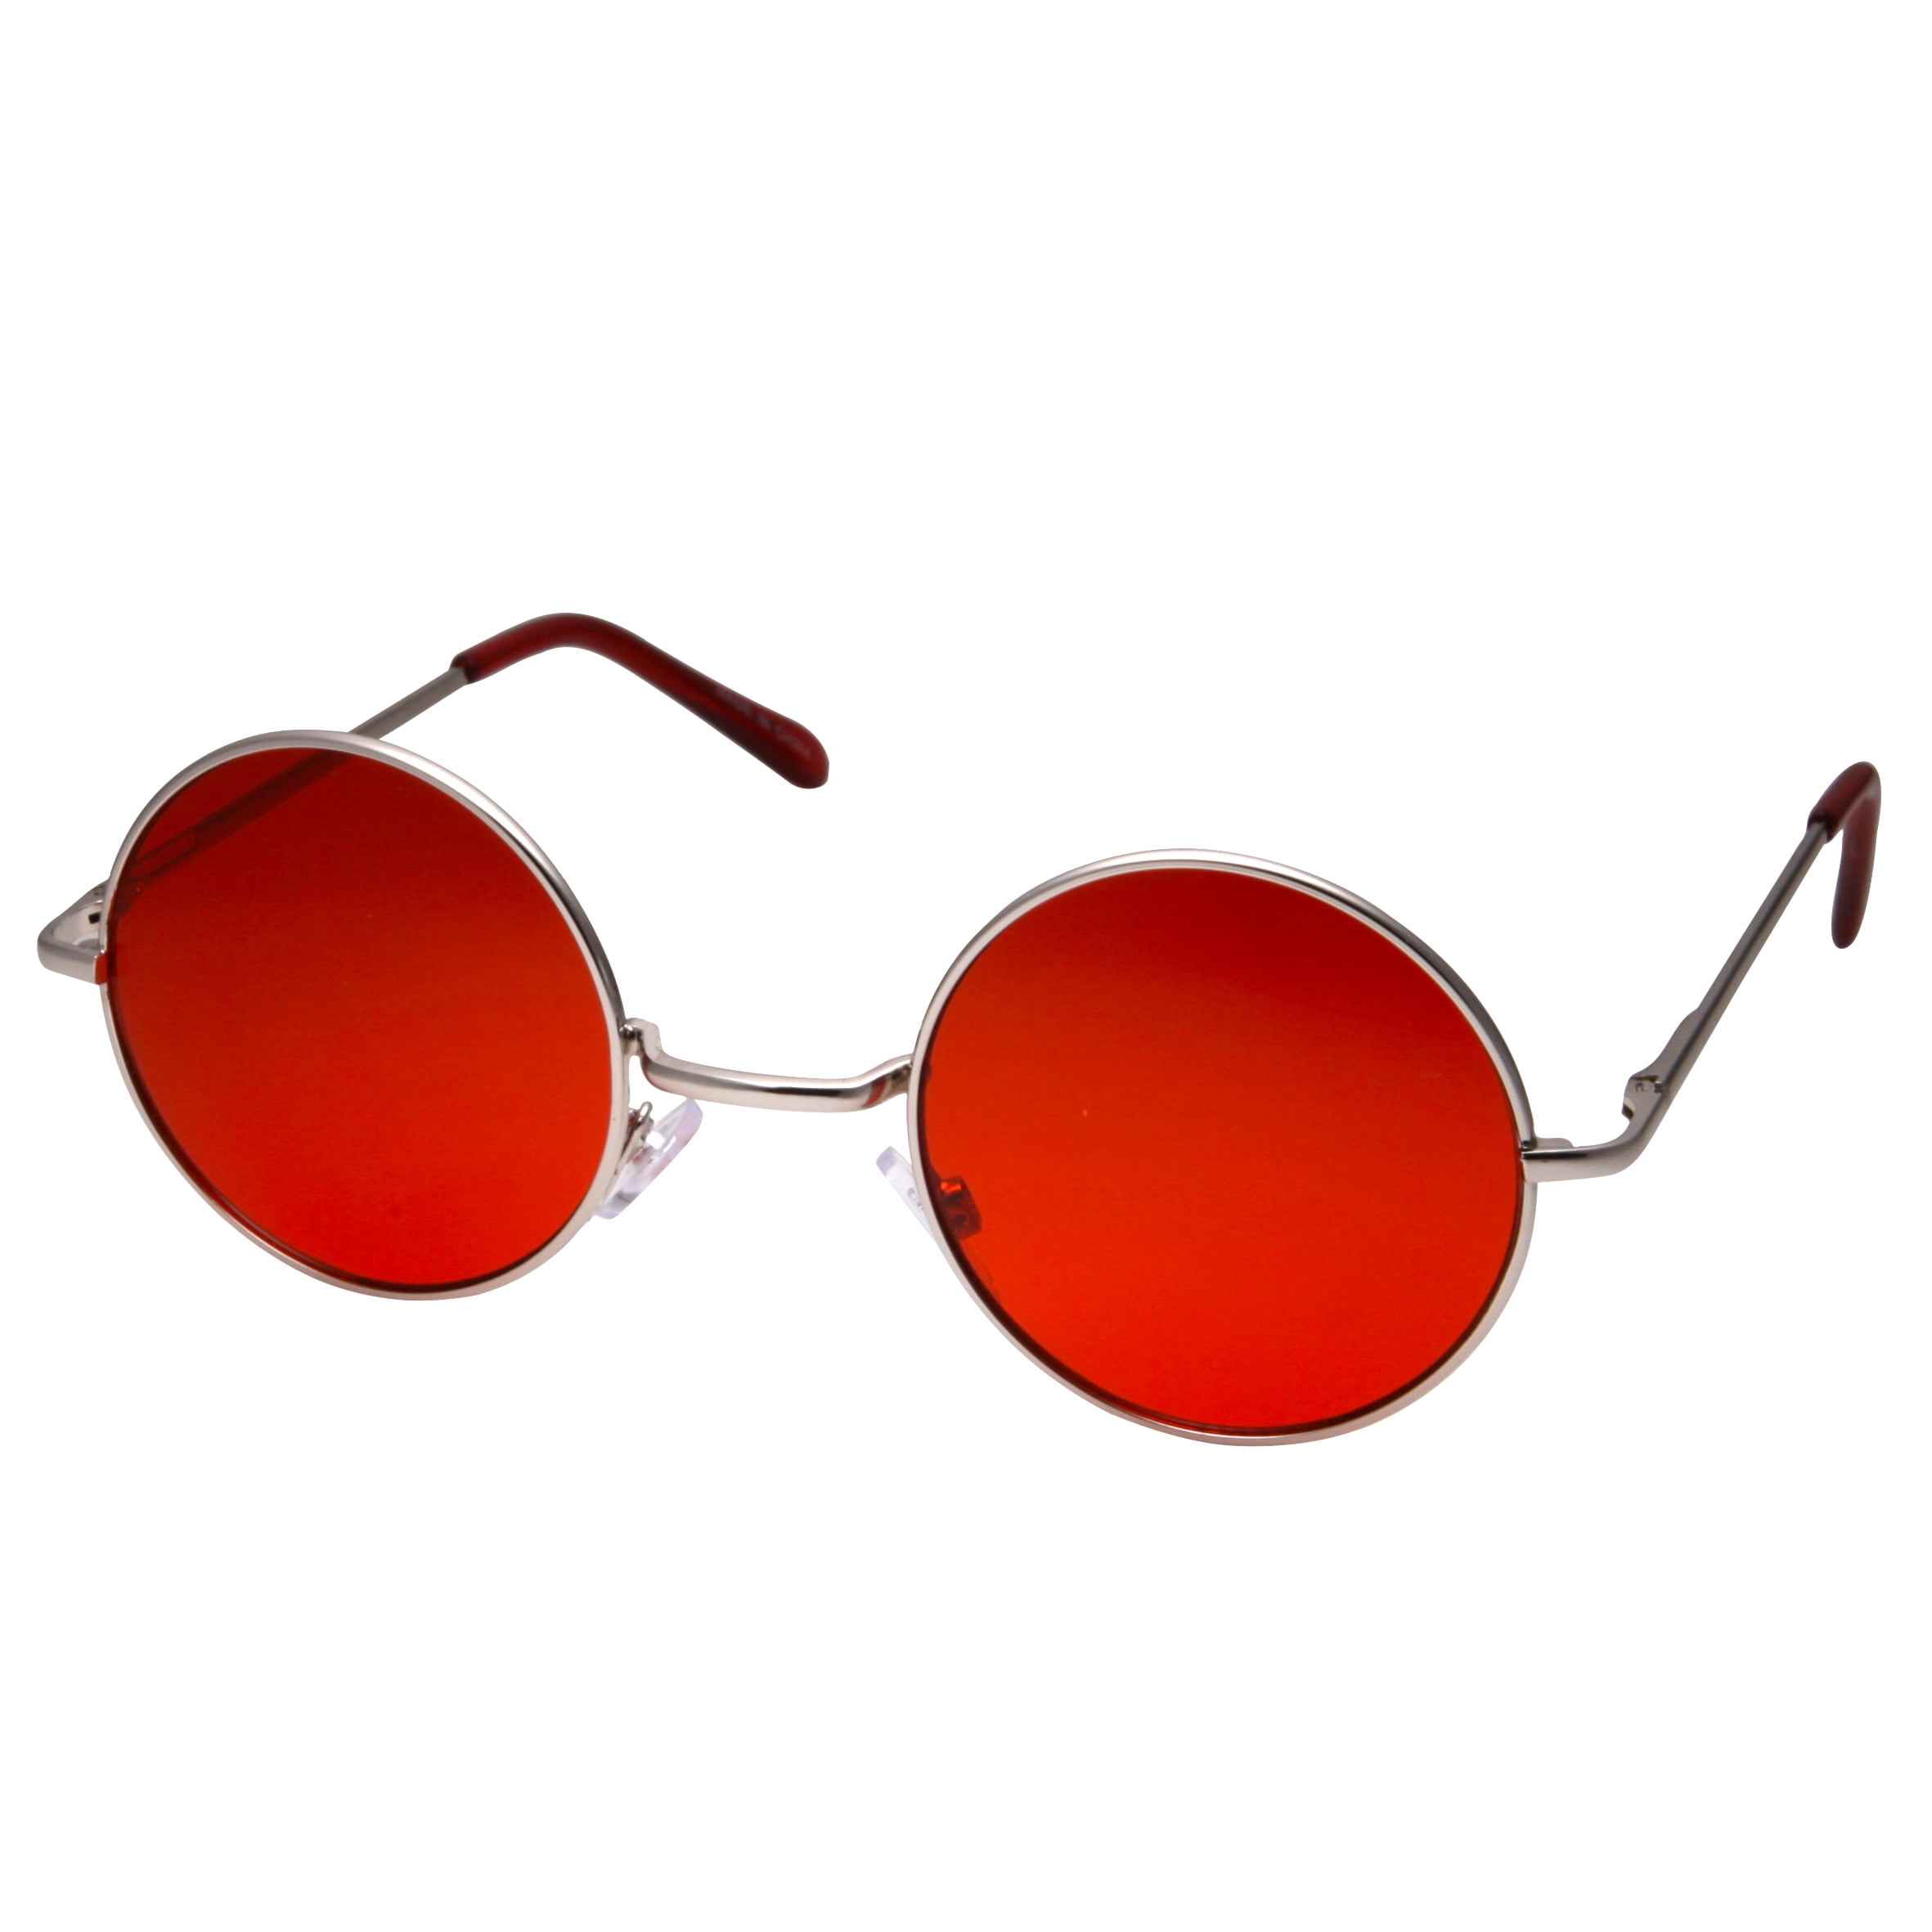 Burnt Orange John Lennon Style Round Sunglasses Retro Adults Men Womens Glasses 